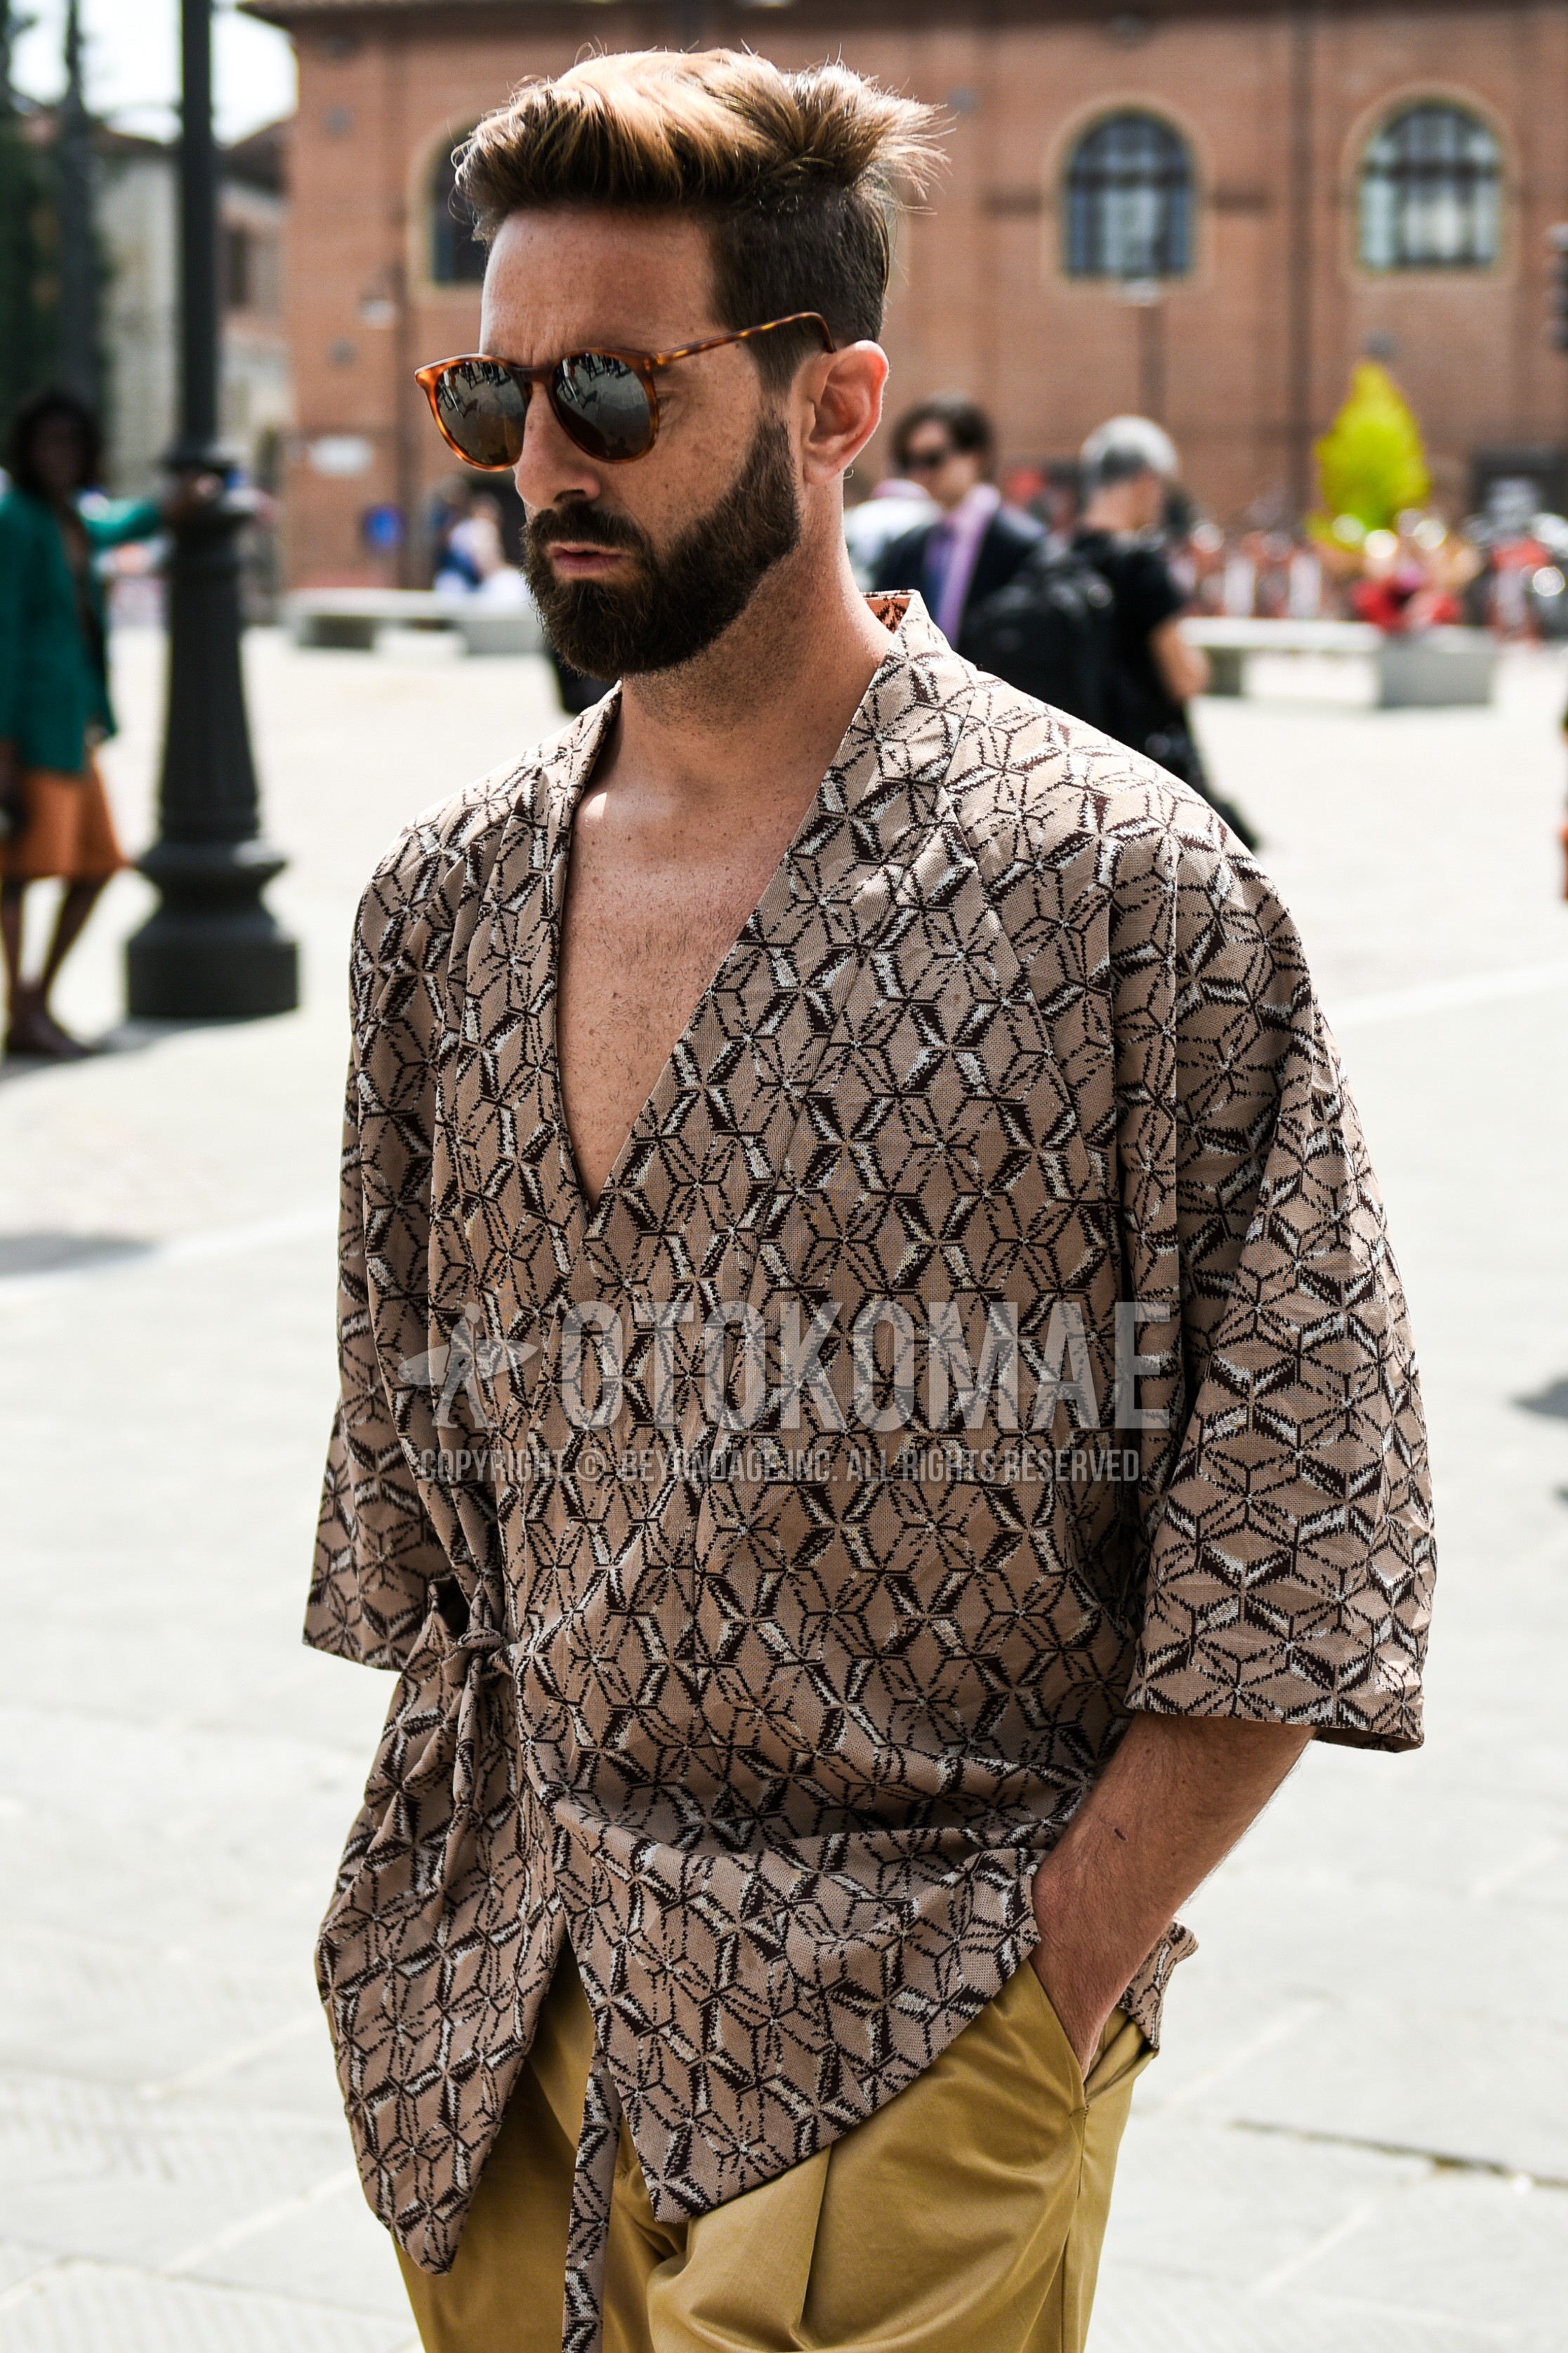 Men's summer outfit with brown tortoiseshell sunglasses, beige tops/innerwear shirt, beige plain chinos.